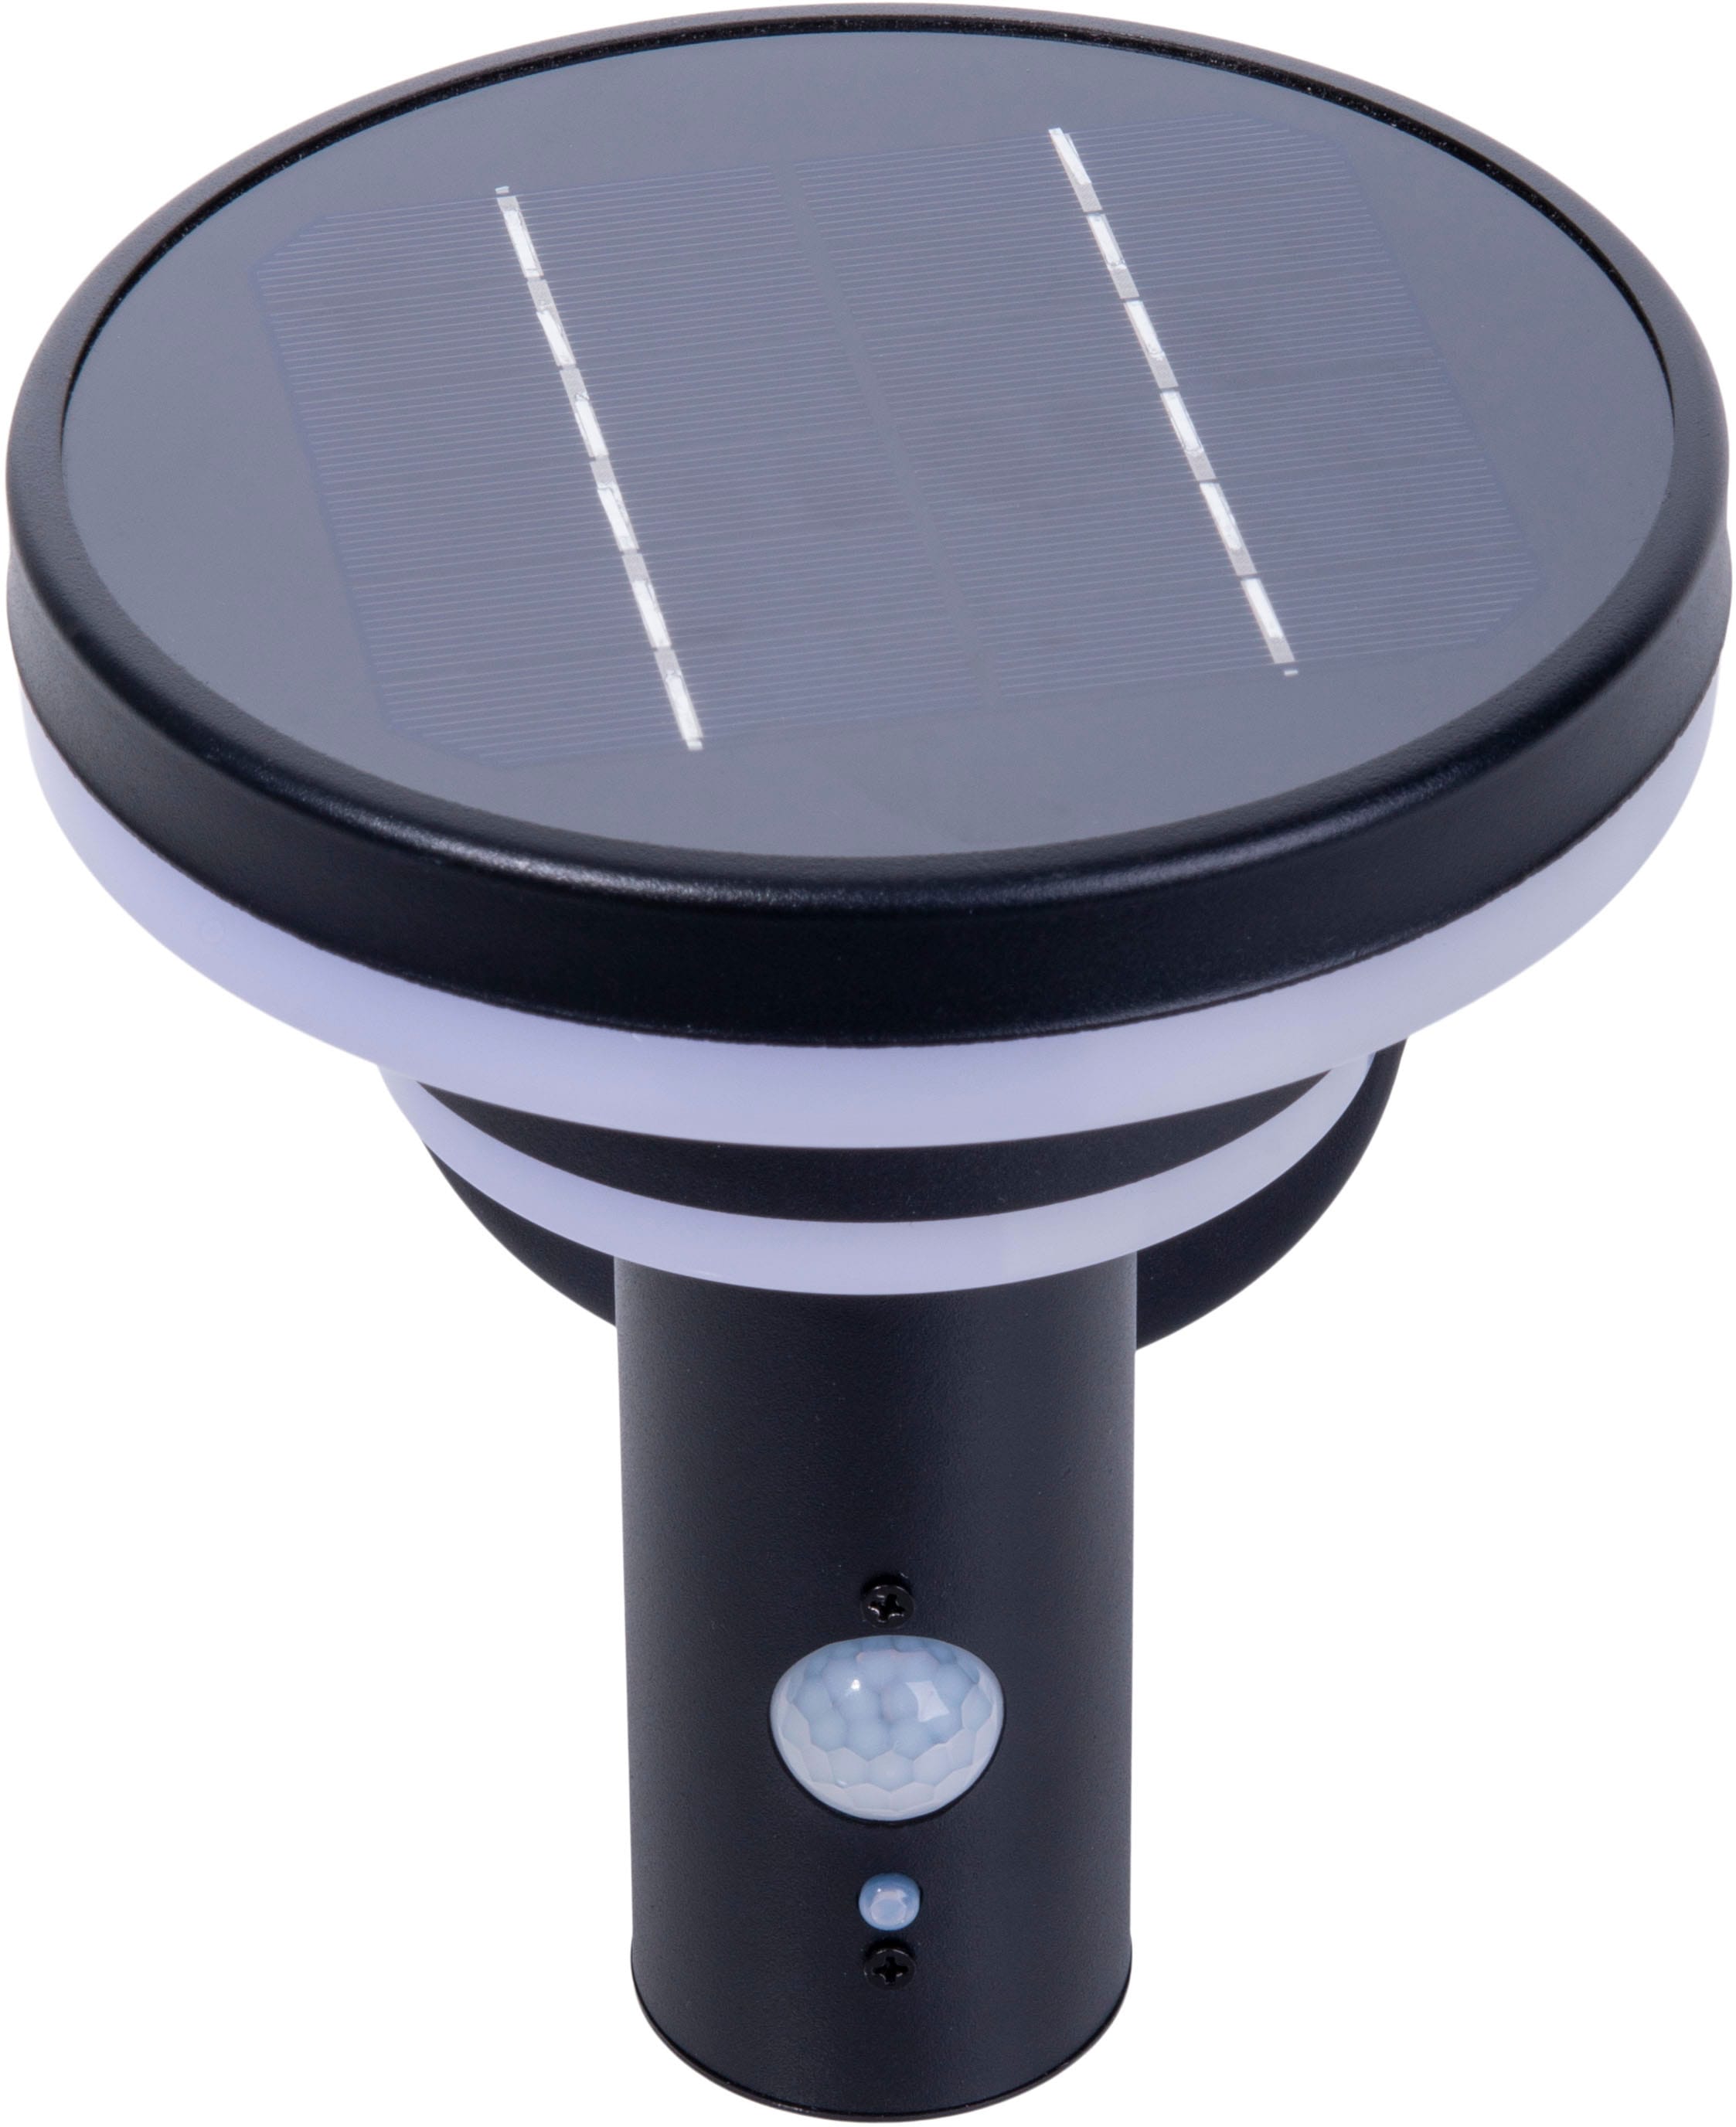 näve LED Solarleuchte »Nora«, 1 flammig, Leuchtmittel LED-Modul | LED fest integriert, inkl. Bewegungsmelder, per Tippschalter in 3-Stufen einstellbar